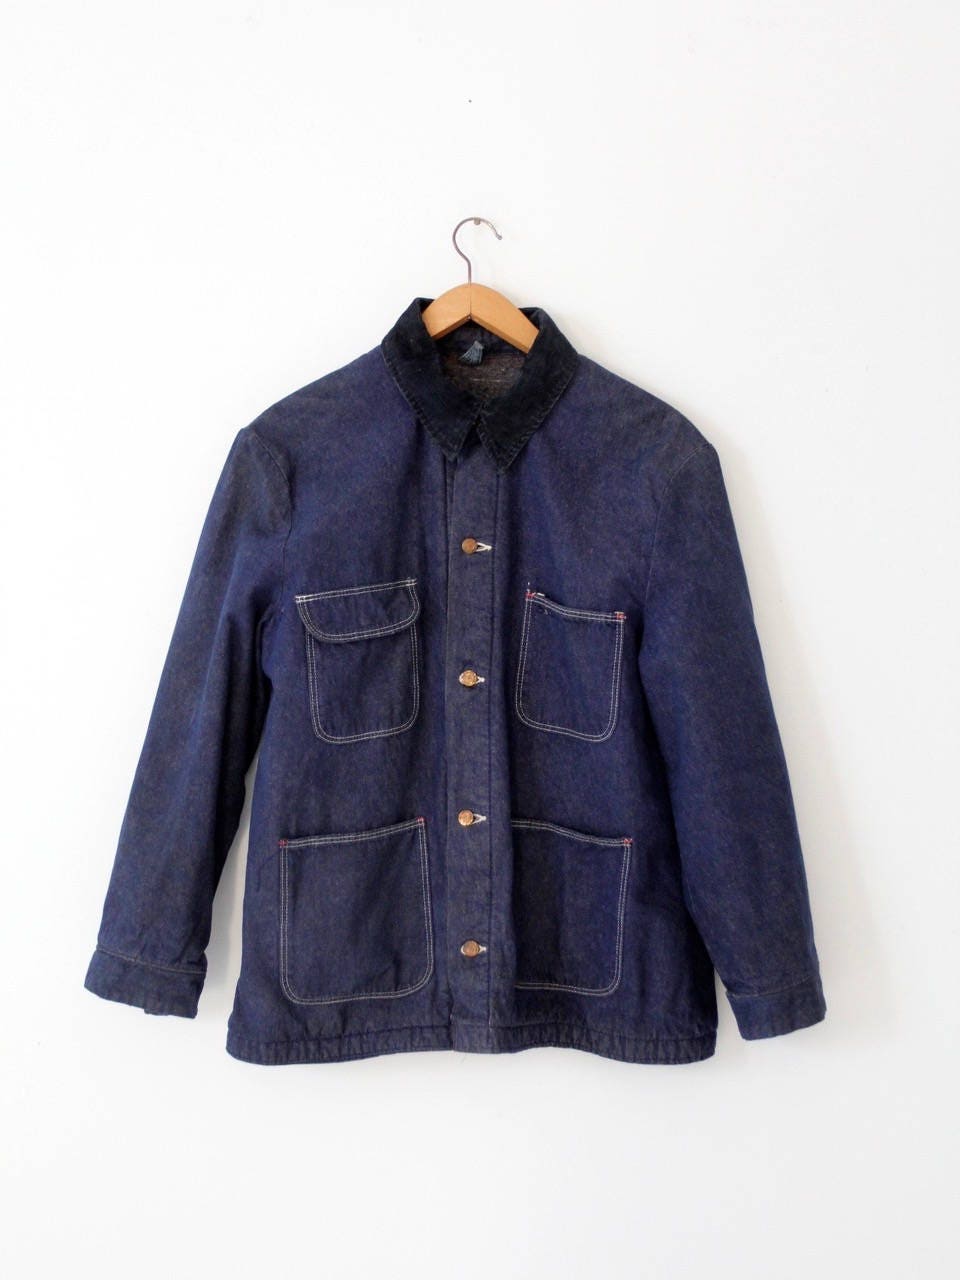 Vintage Wrangler Blanket Lined Denim Work Jacket 1950s Barn - Etsy